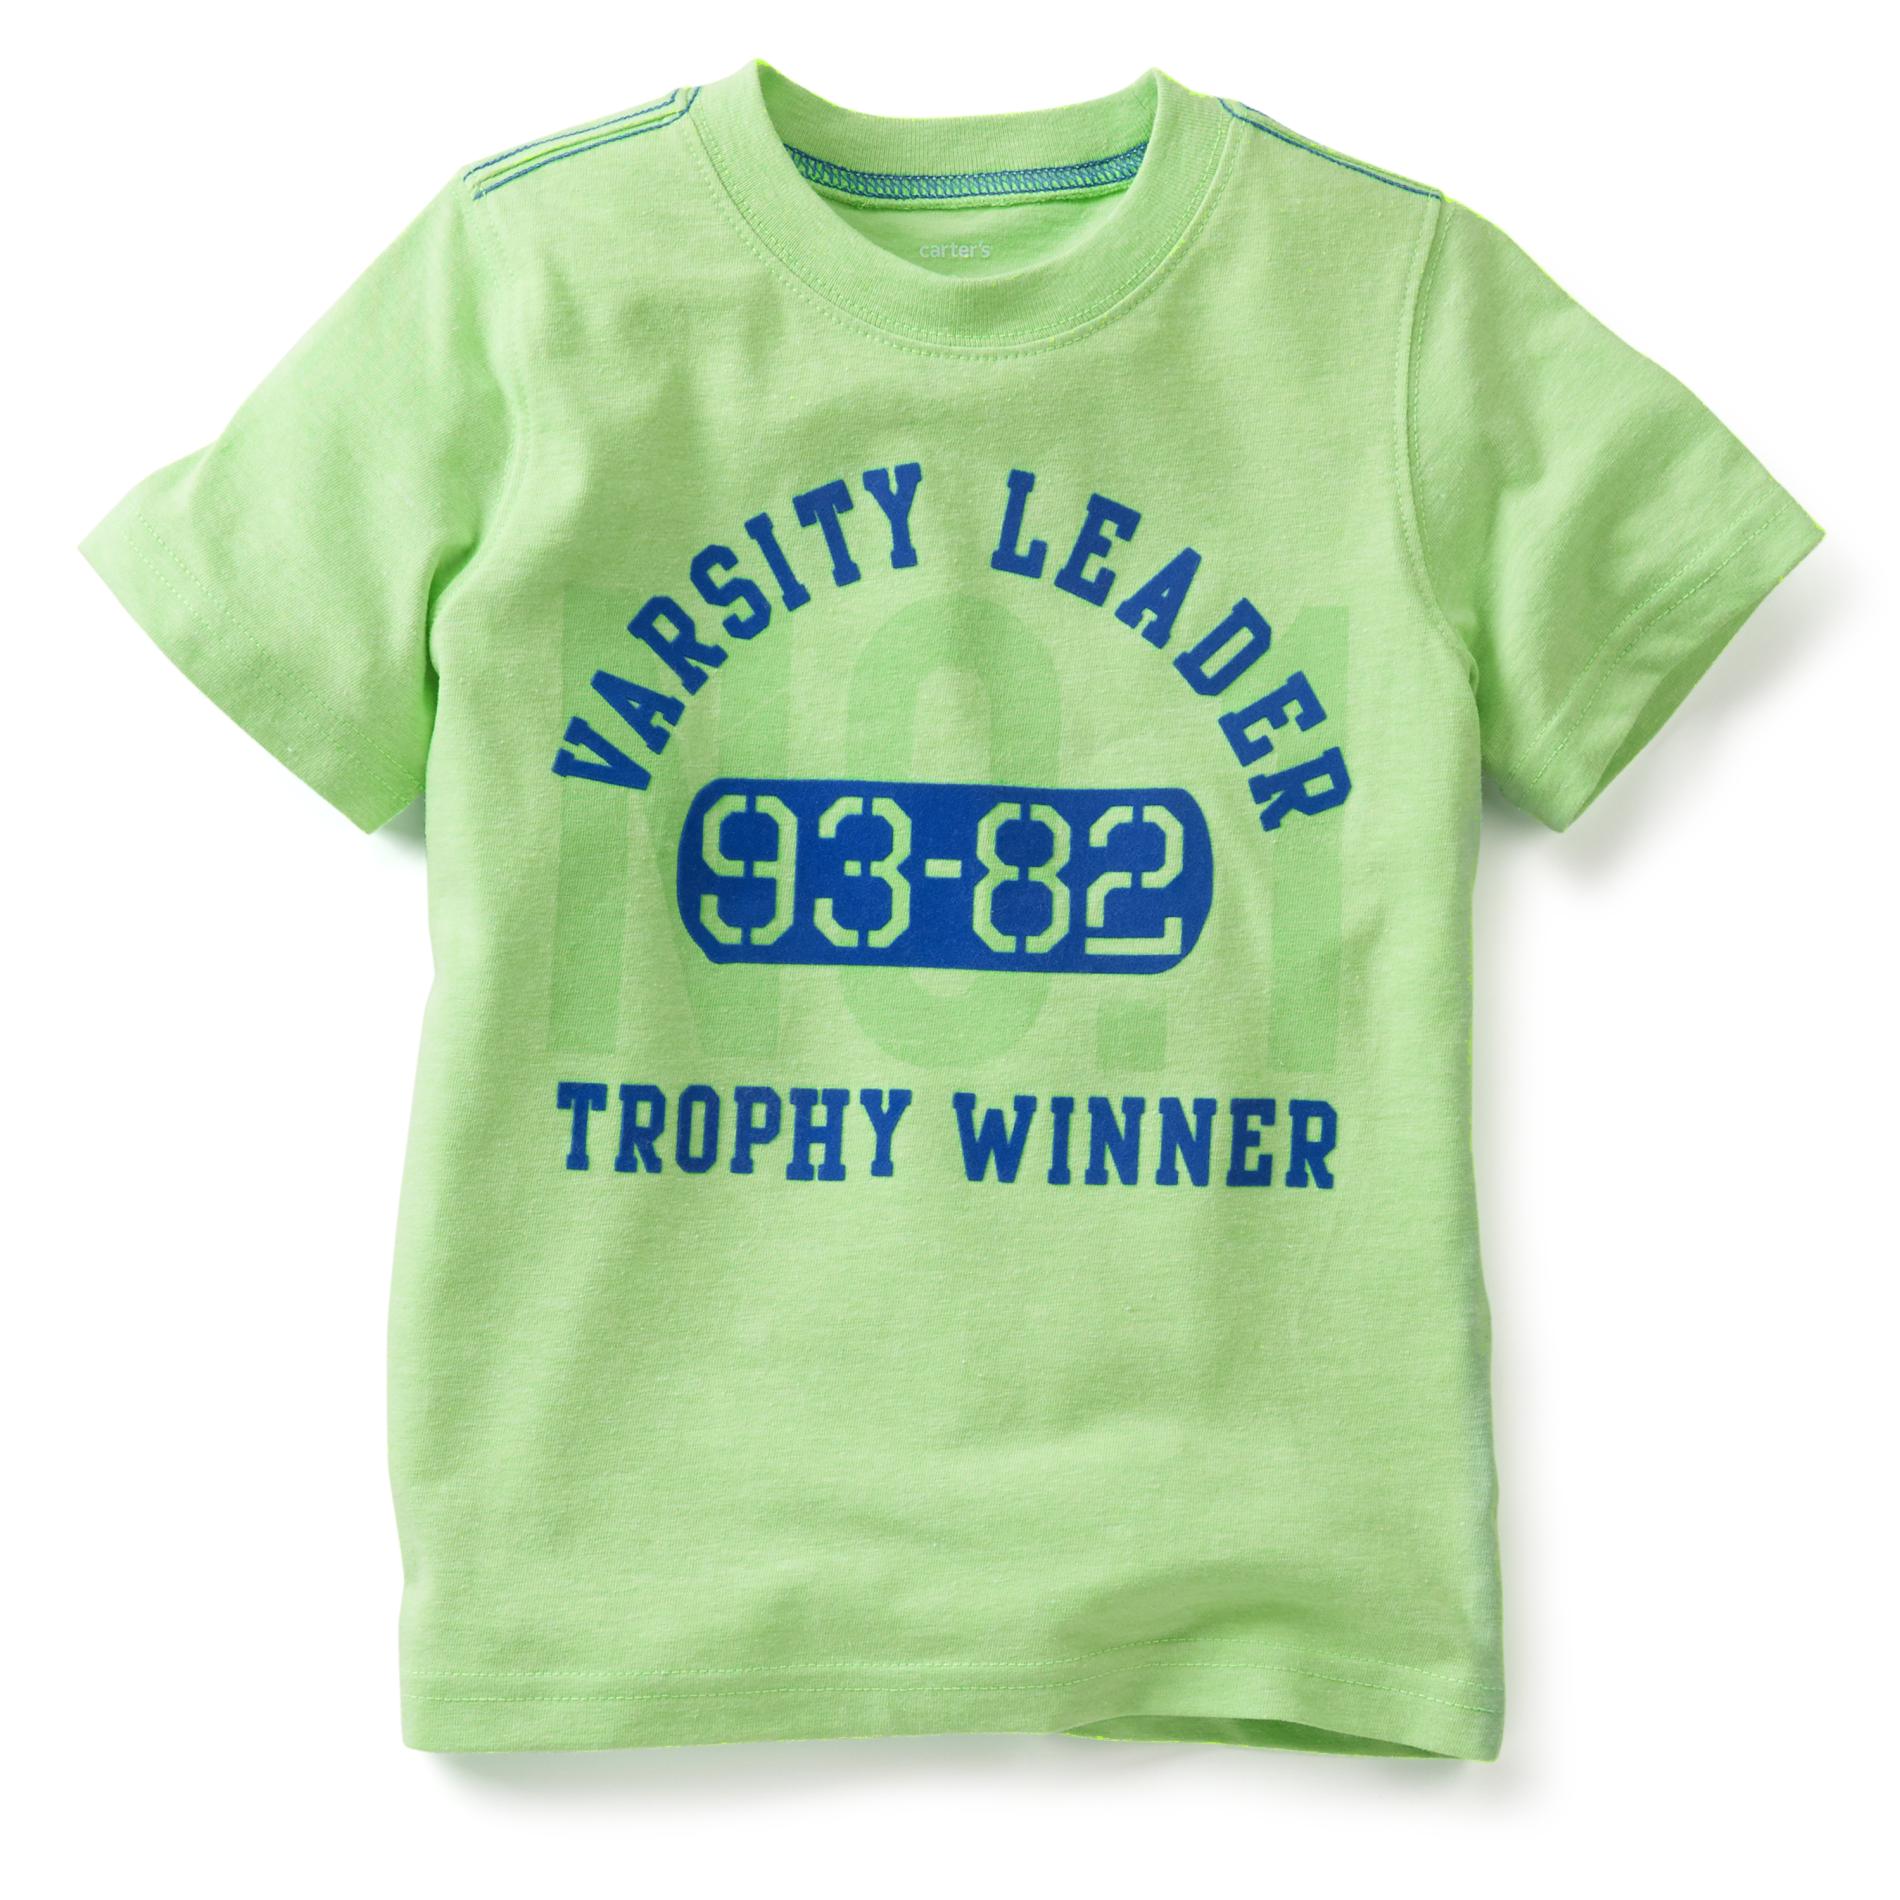 Carter's Toddler Boy's Graphic T-Shirt - Varsity Leader